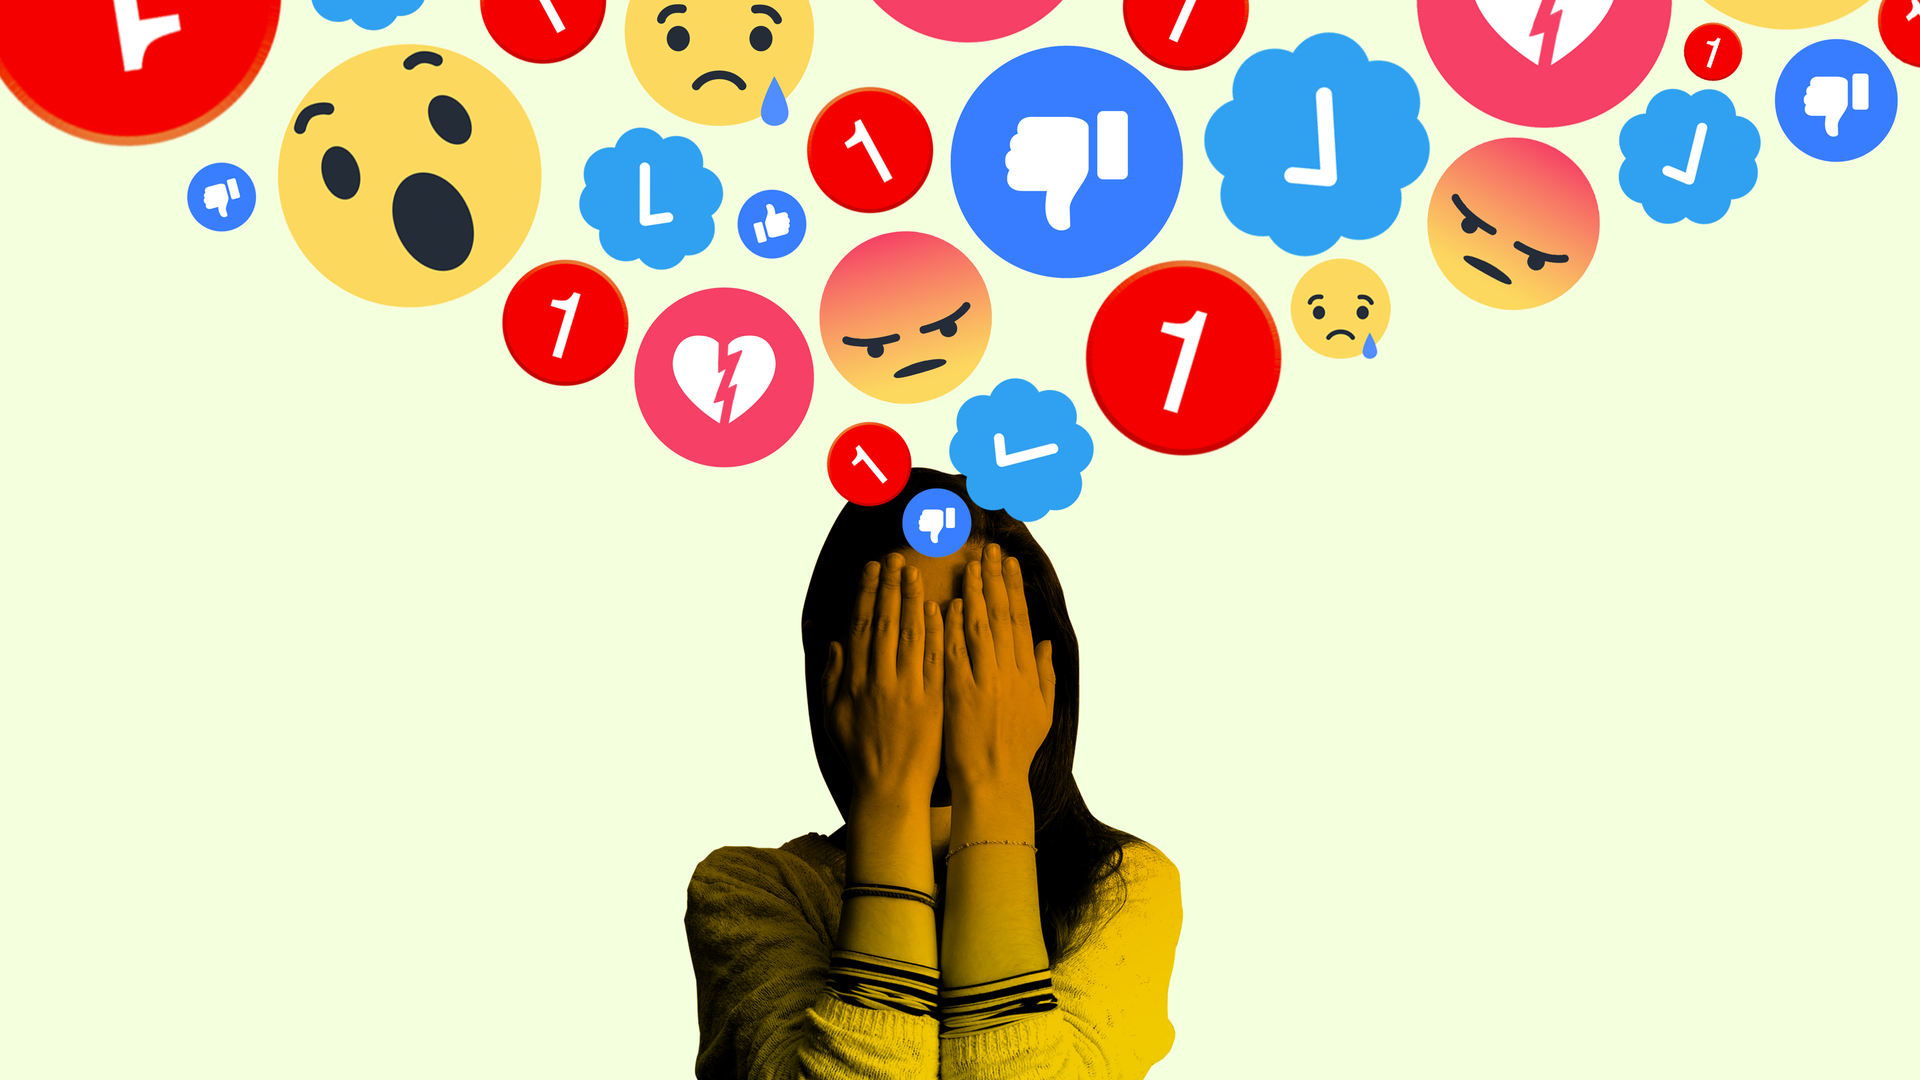 An illustration depicting a social media-fueled mental health crisis.